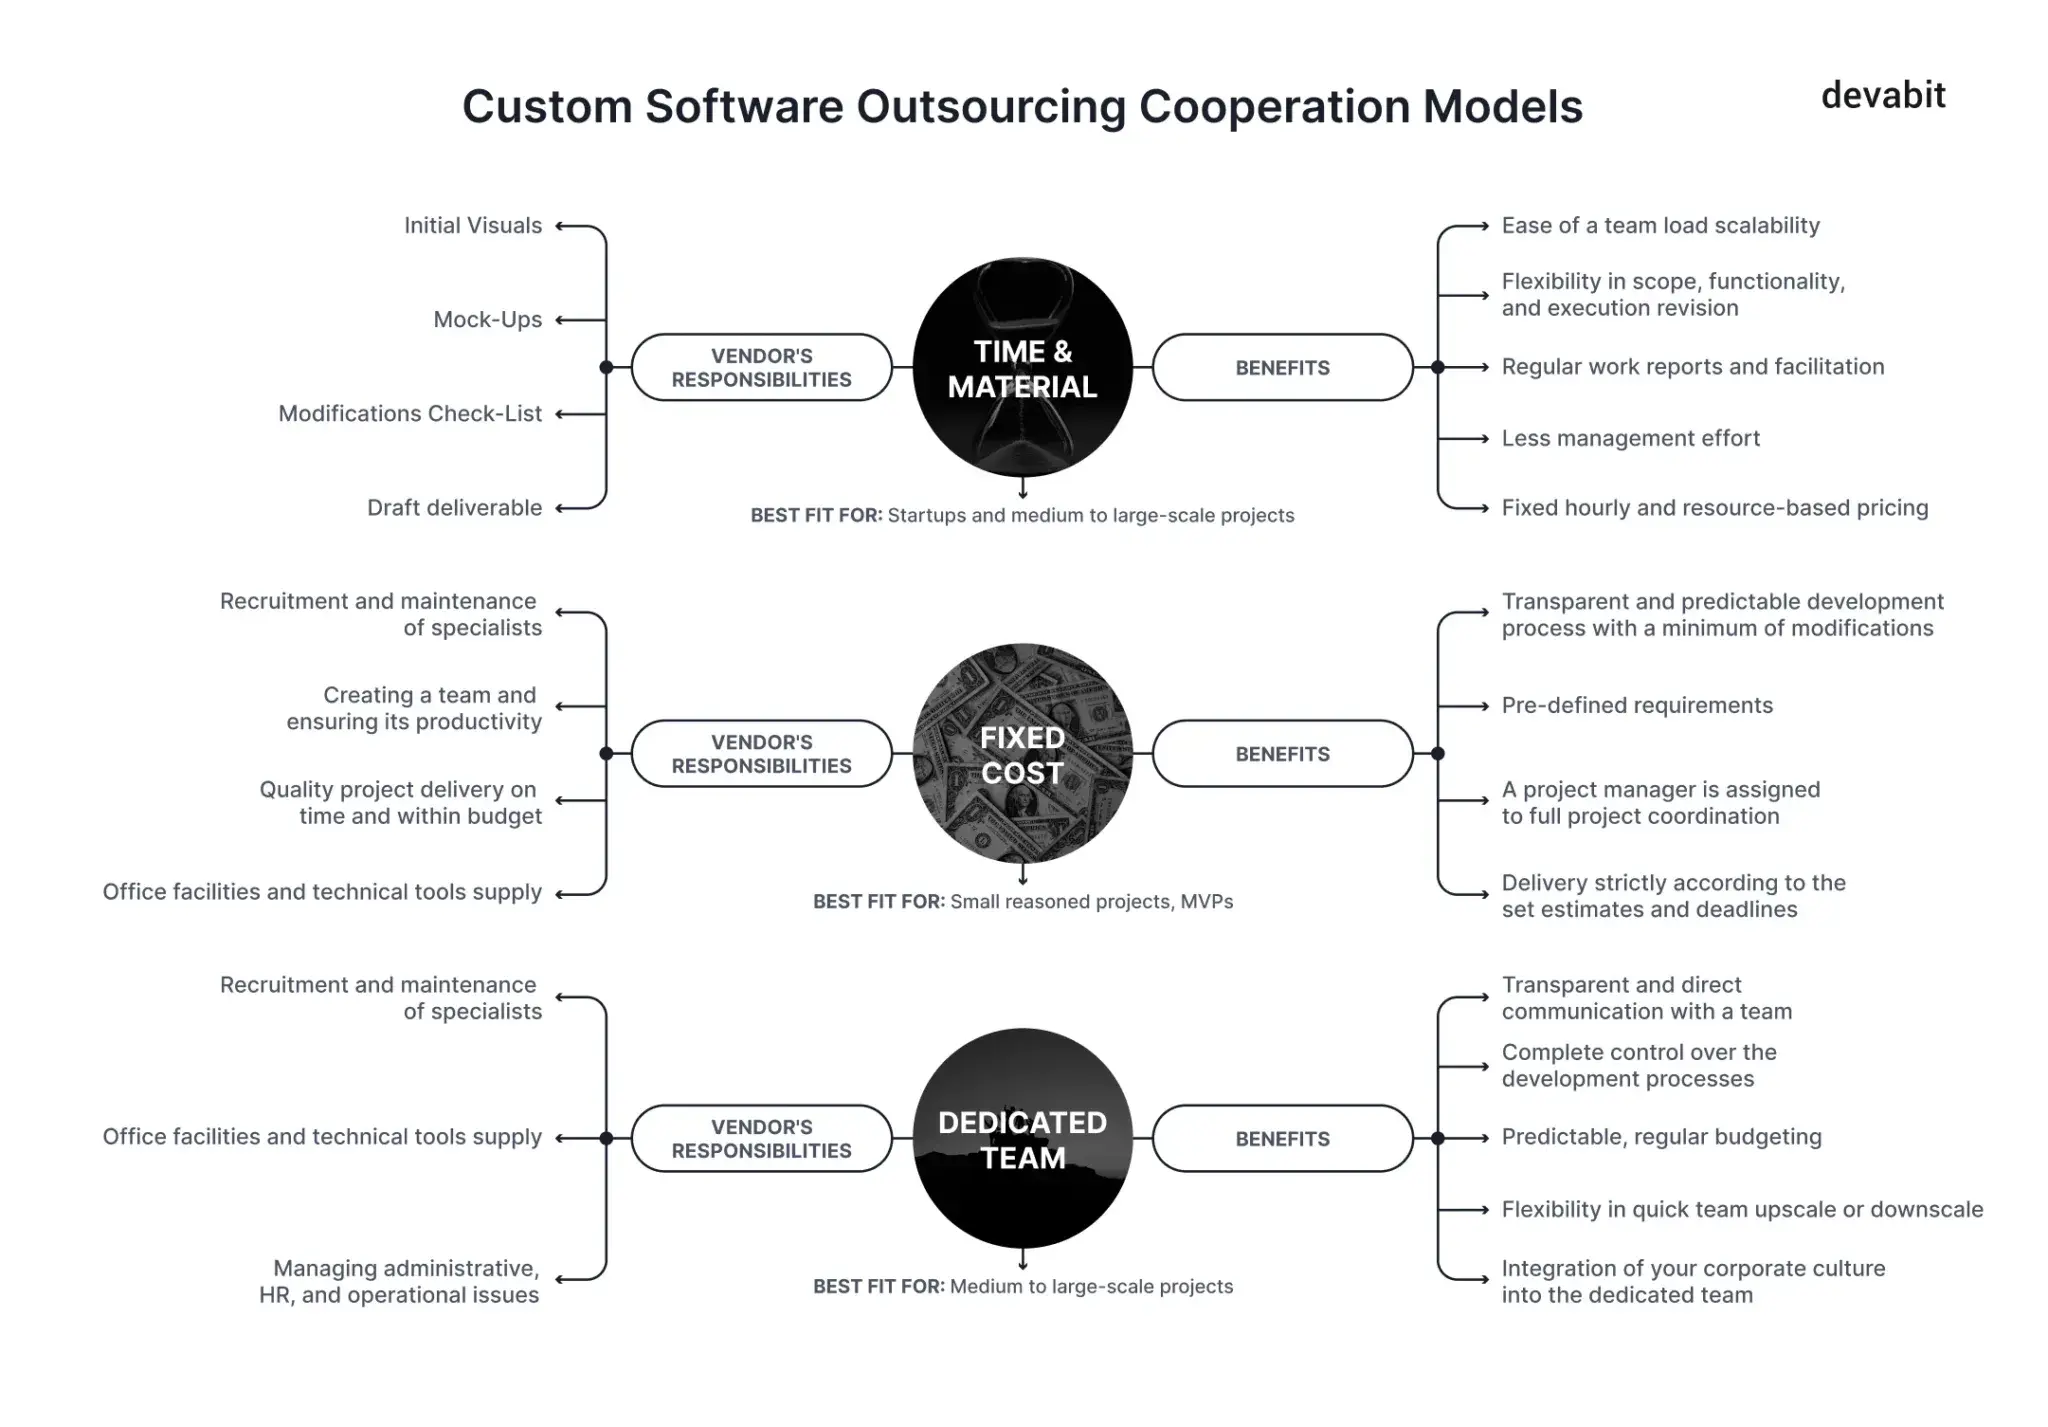 Software Development Outsourcing Cooperation Models by devabit